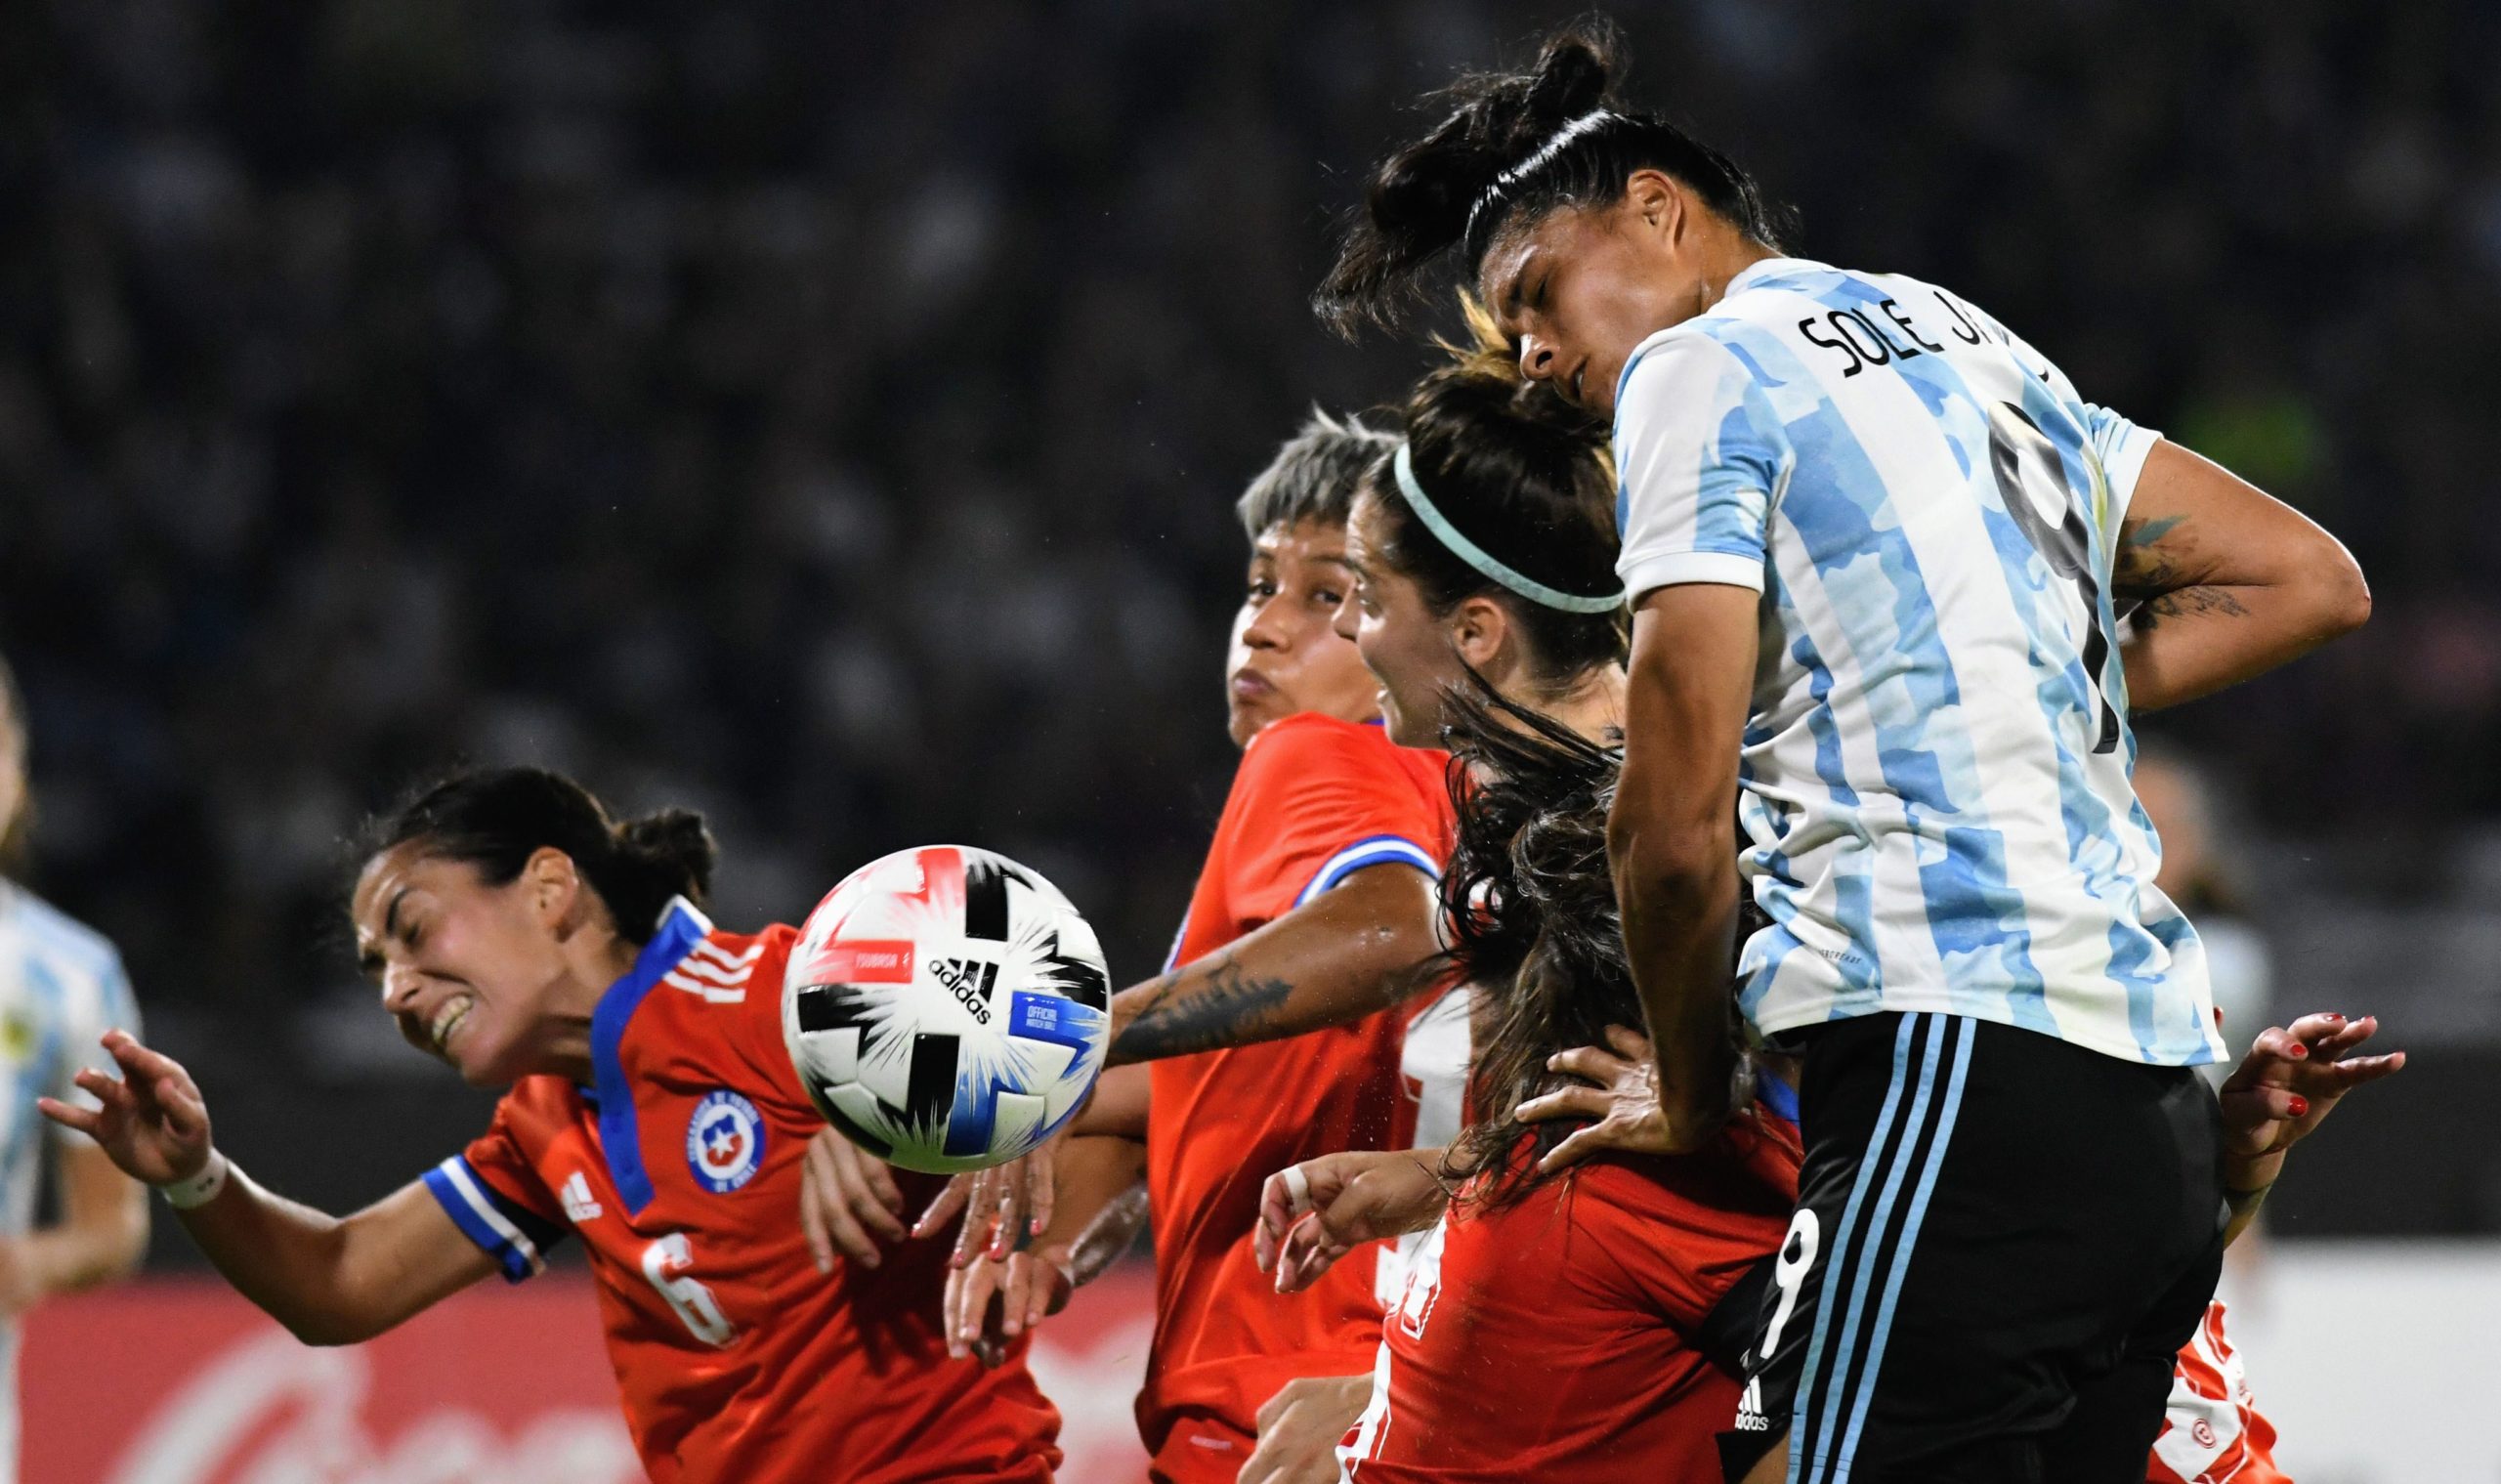 La Selección Argentina perdió ante Chile en Córdoba | Canal Showsport